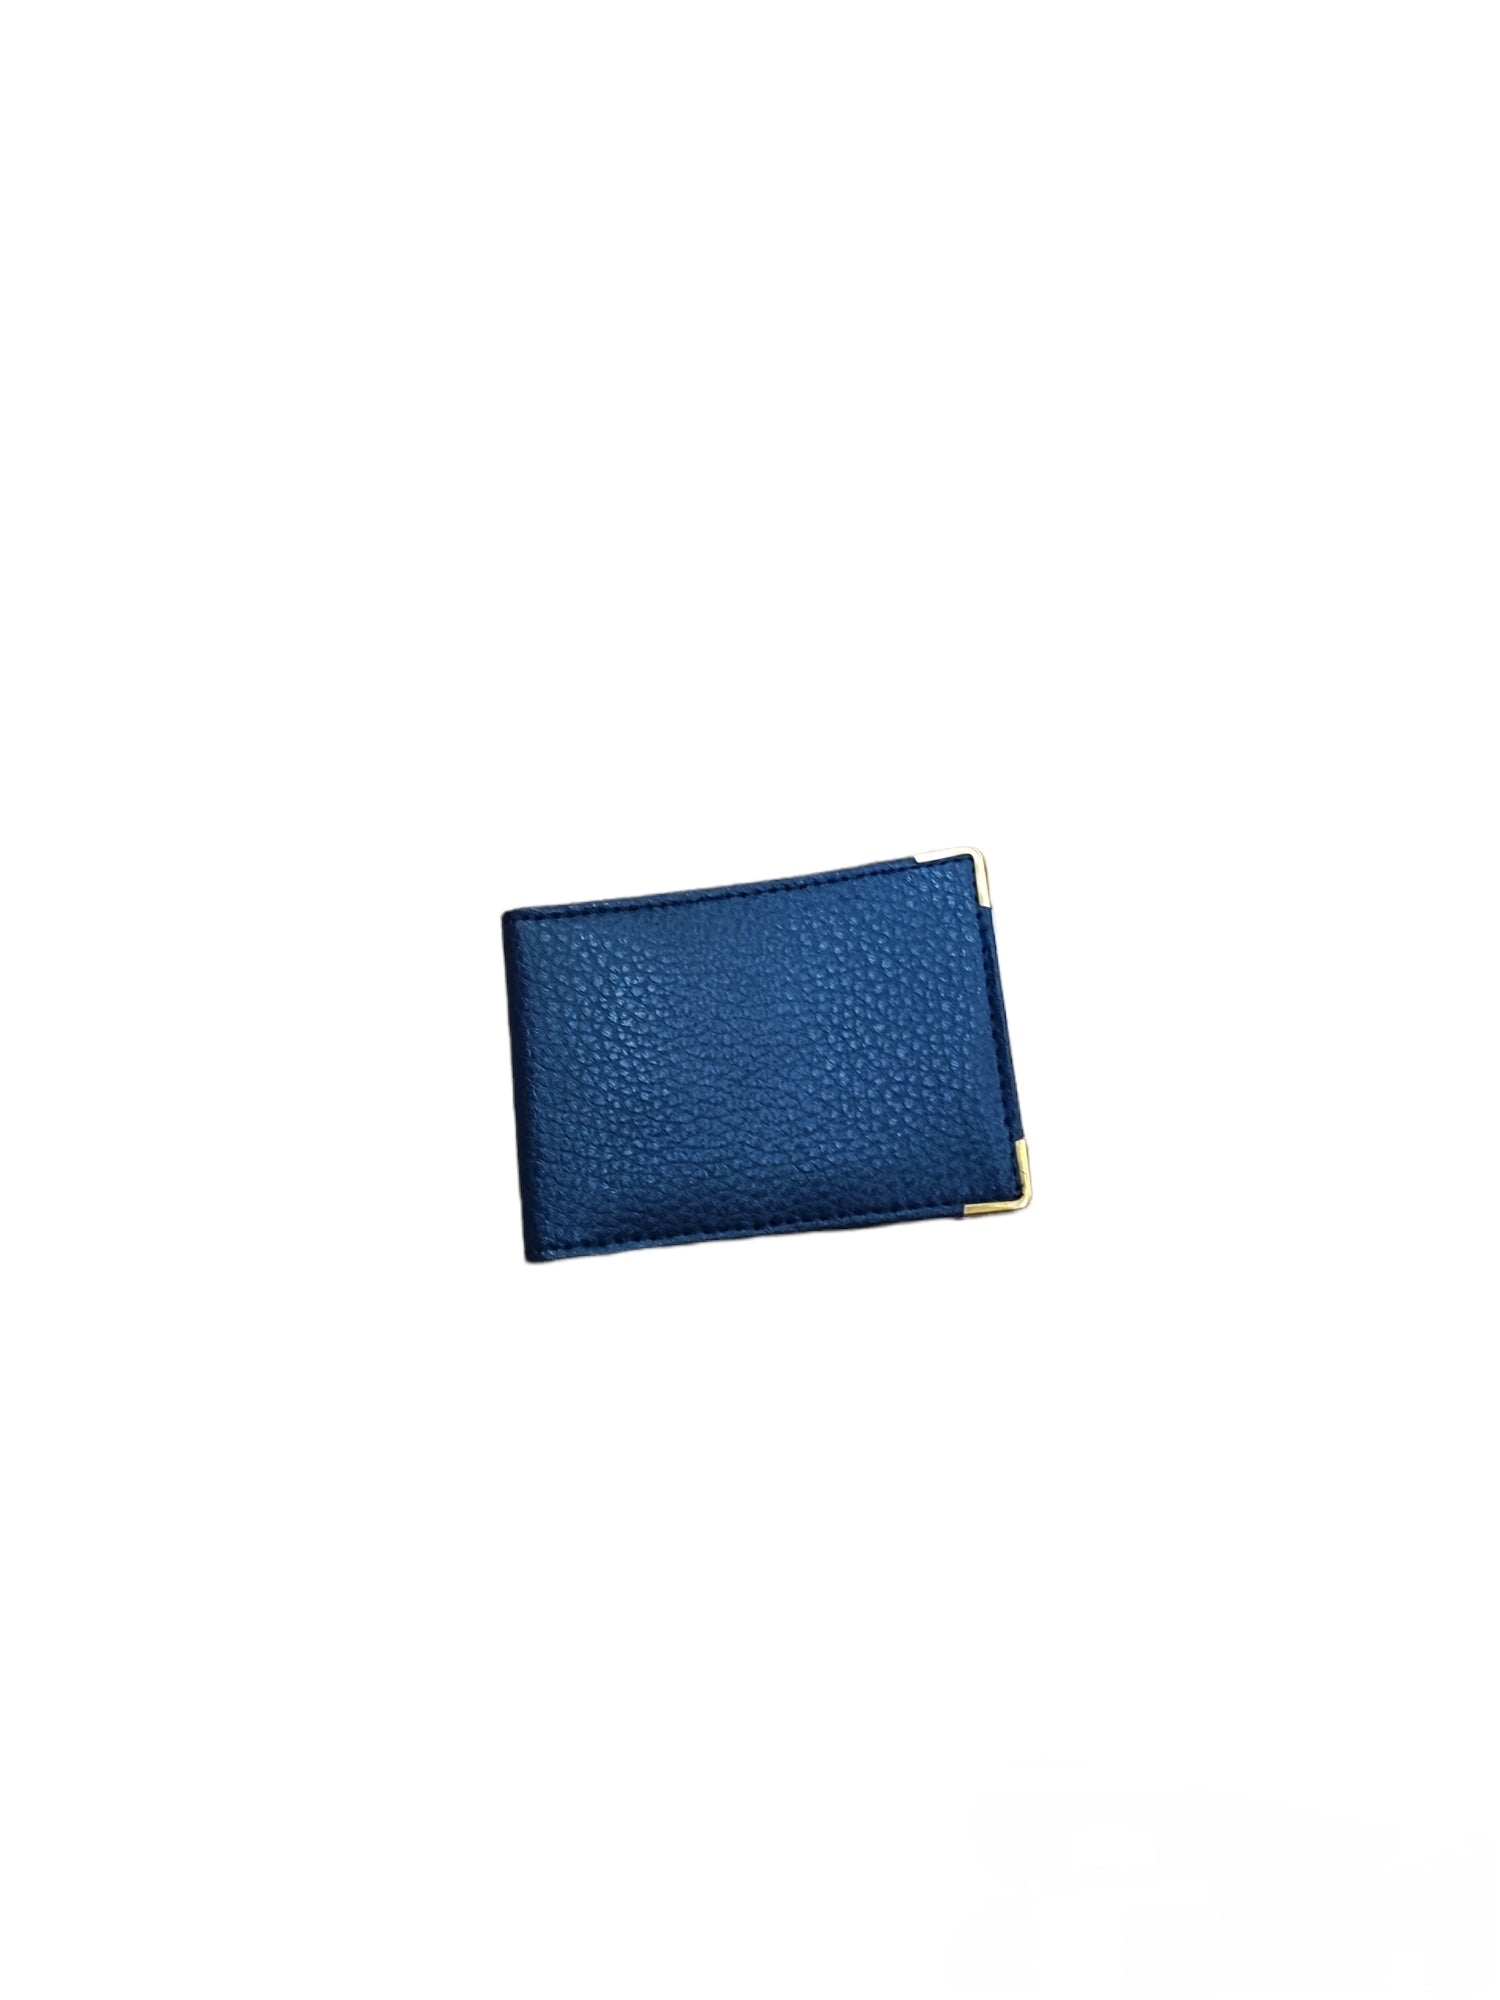 Card holder Split cowhide leather #N-015 (x12)